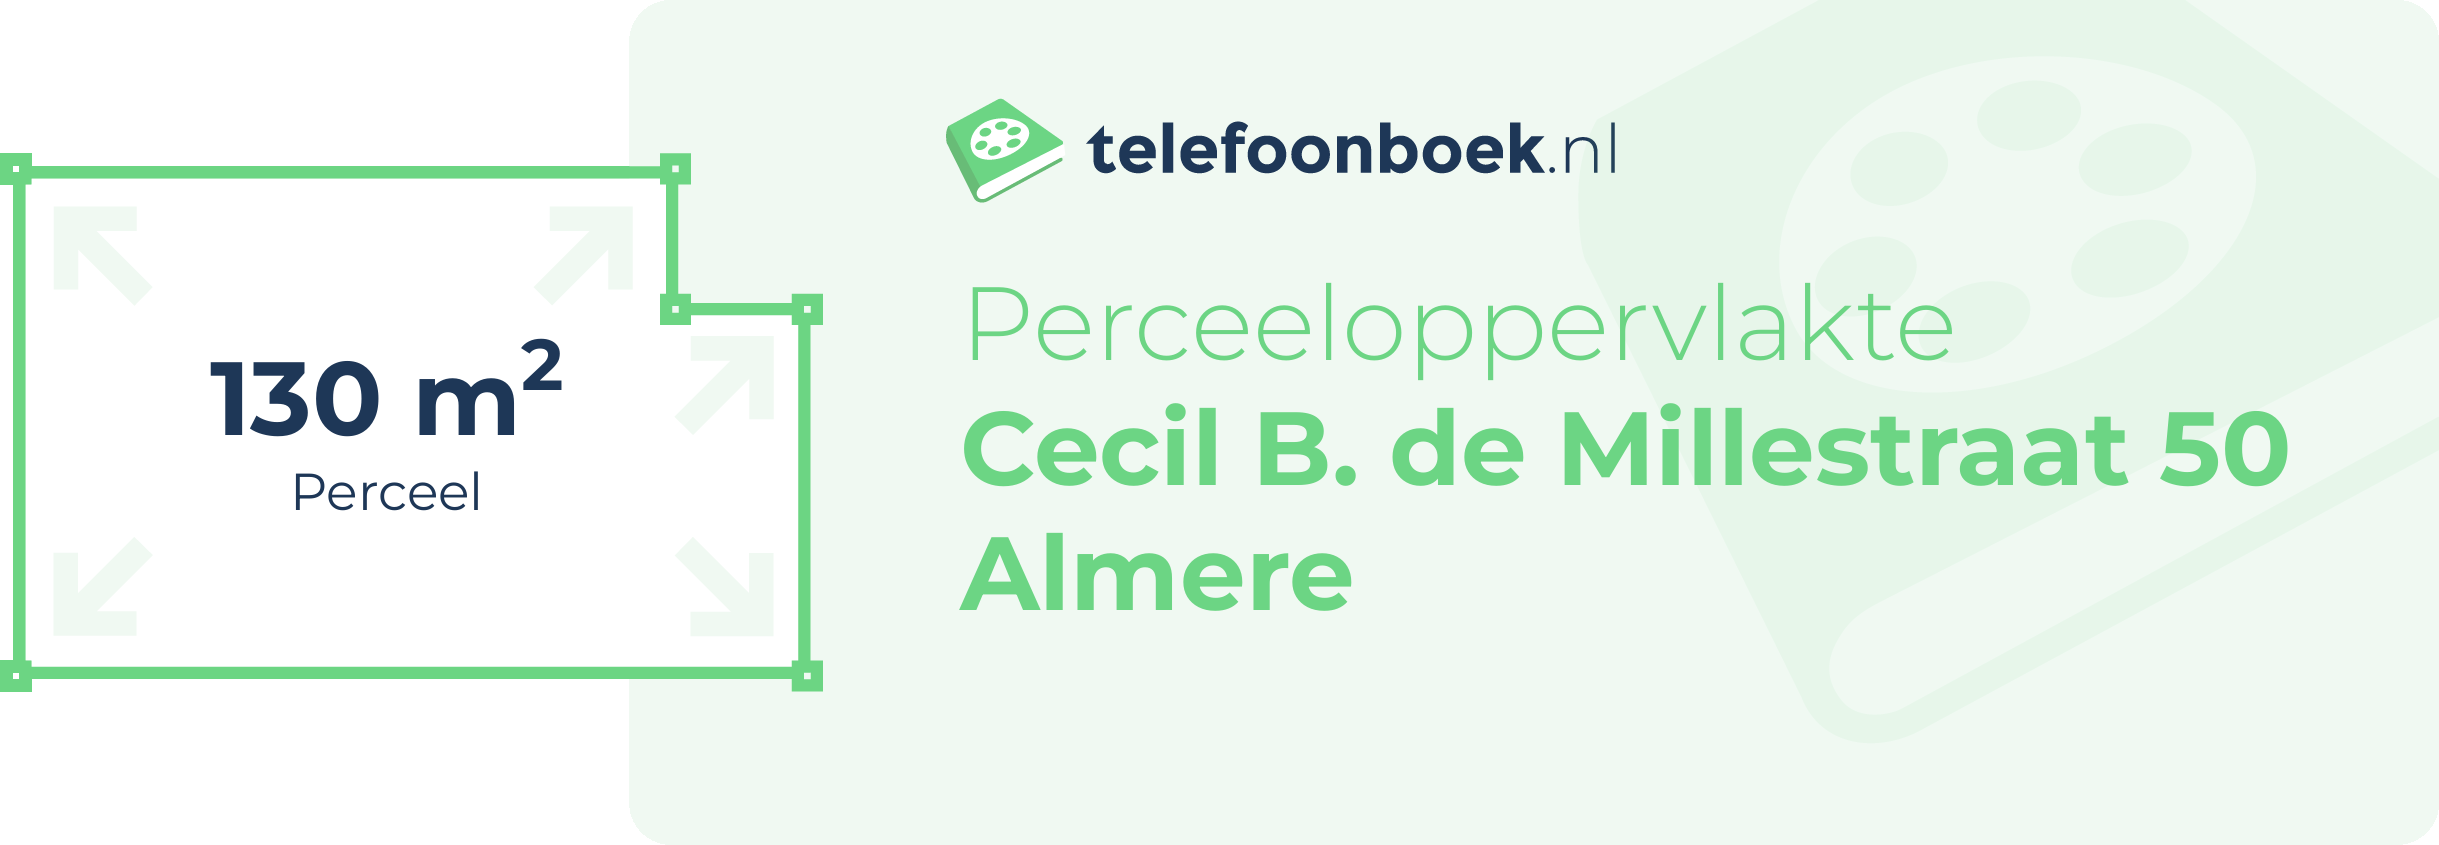 Perceeloppervlakte Cecil B. De Millestraat 50 Almere